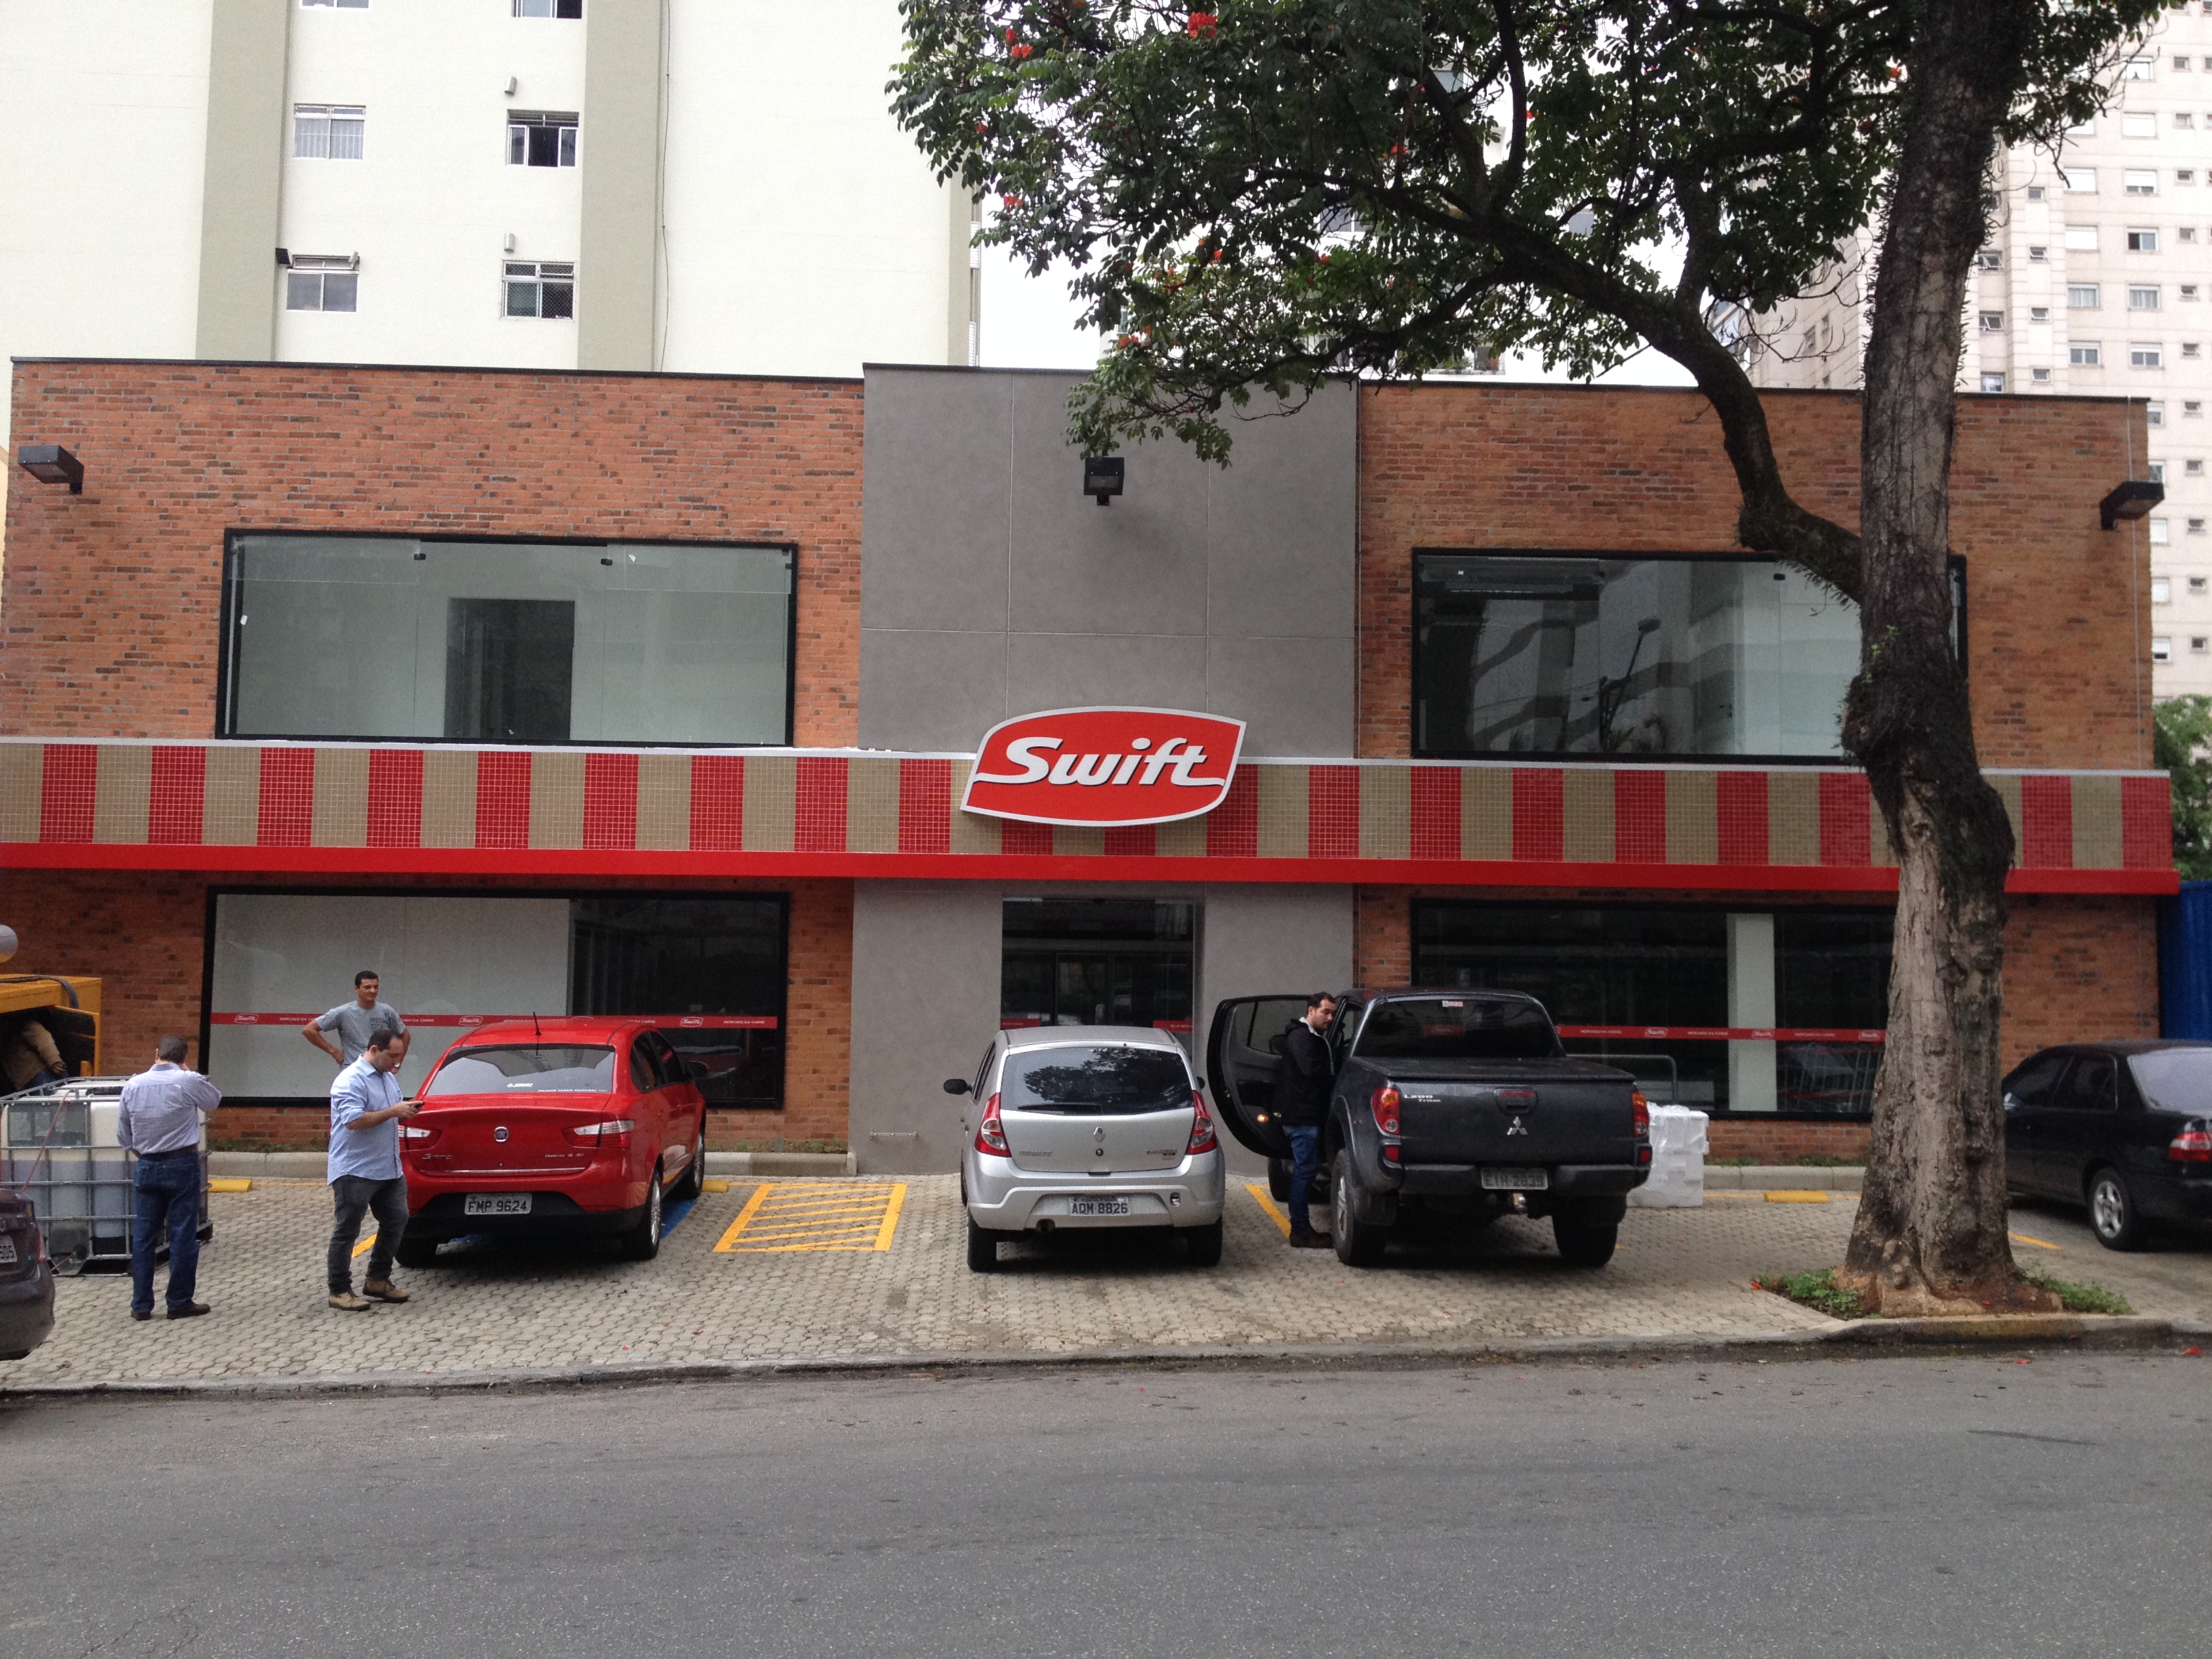 Swift - Mercado da Carne on Behance